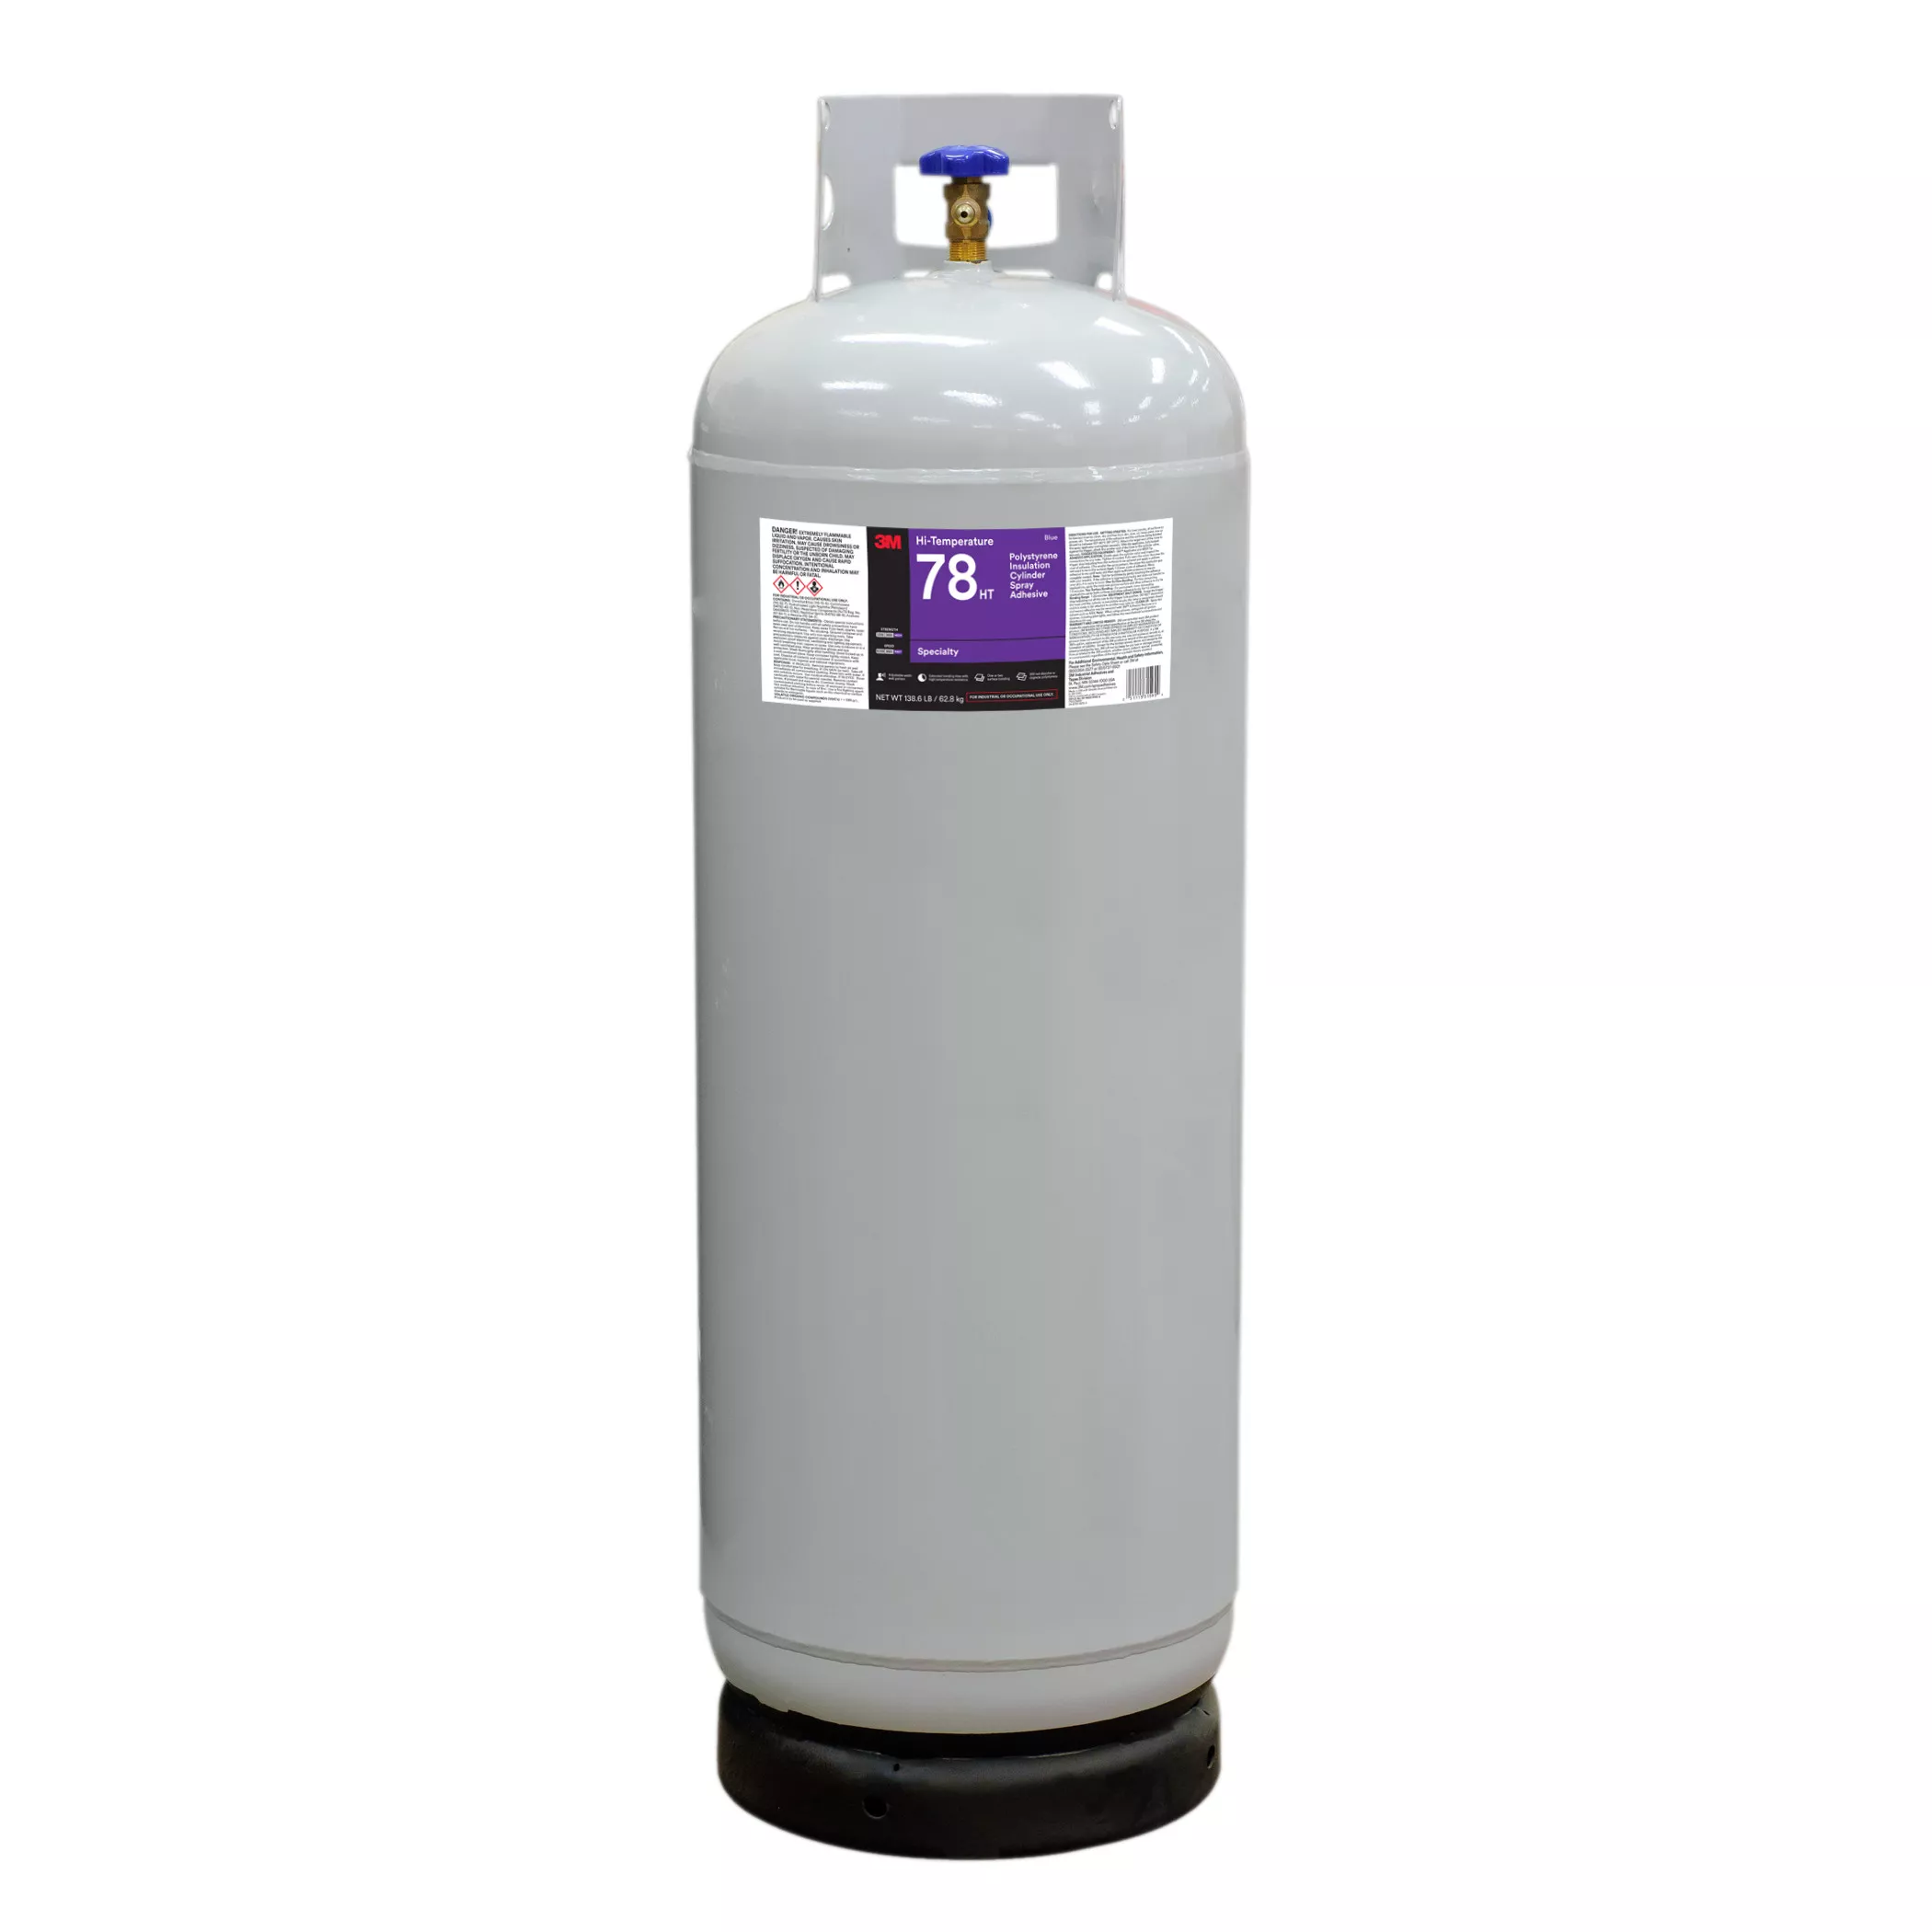 3M™ Hi-Temperature Polystyrene Insulation 78, HT Spray Adhesive, Blue,
Intermediate (Net Wt 138.6 lb), 1 Each/Cylinder